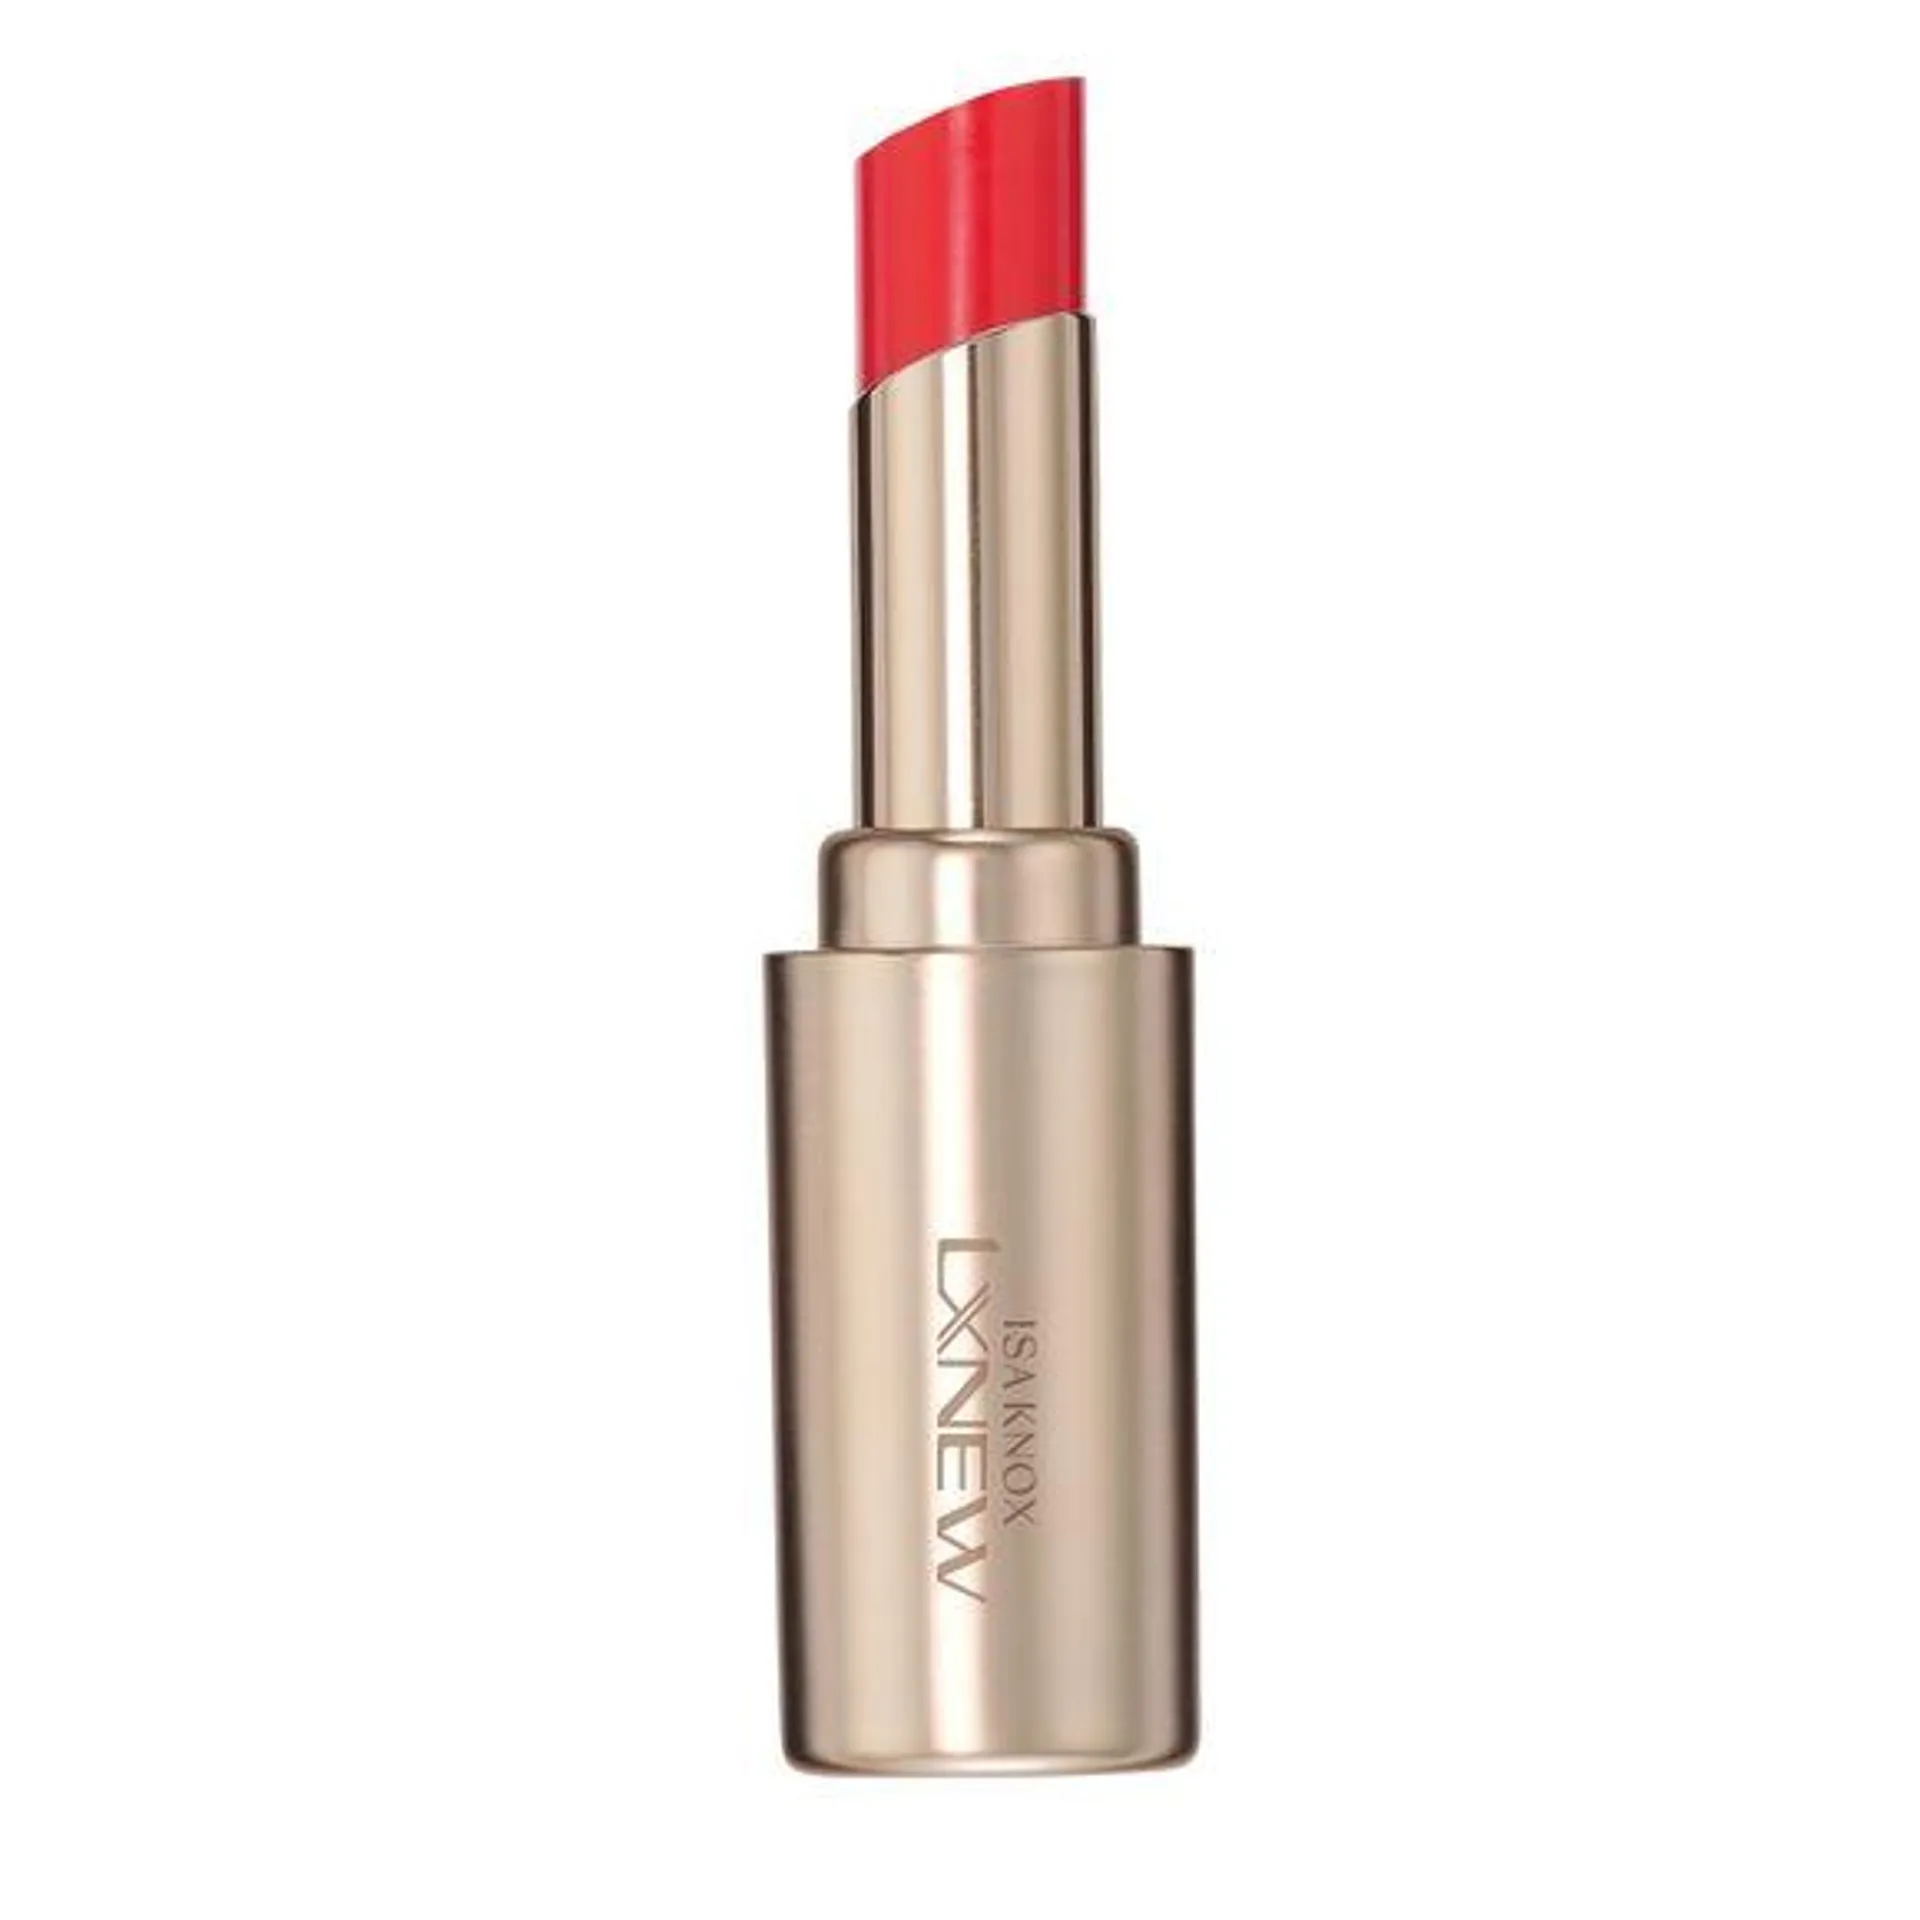 Isa Knox LXNEW Ultimate Rejuvenating Tinted Red Lip Balm